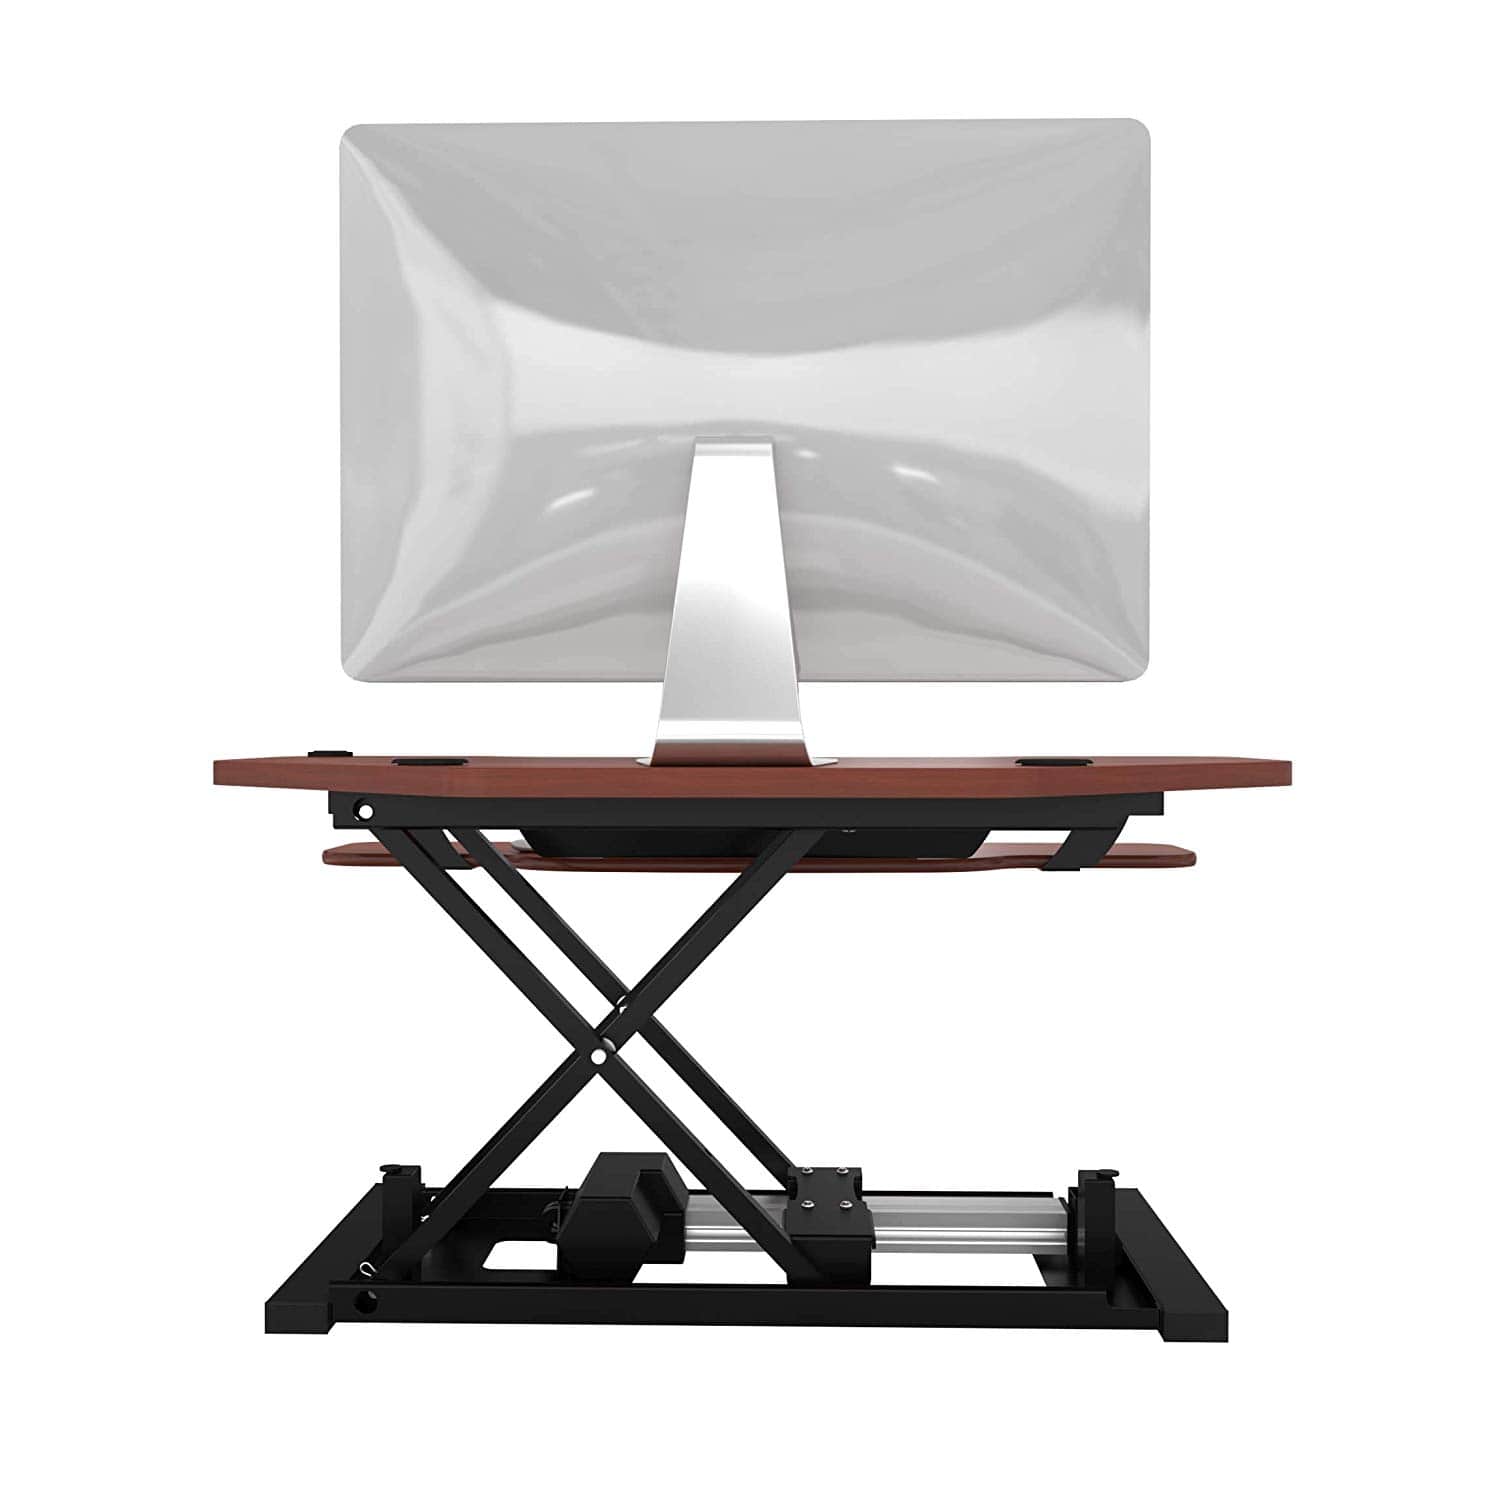 AirRise Adjustable Height Standing Desk Converter